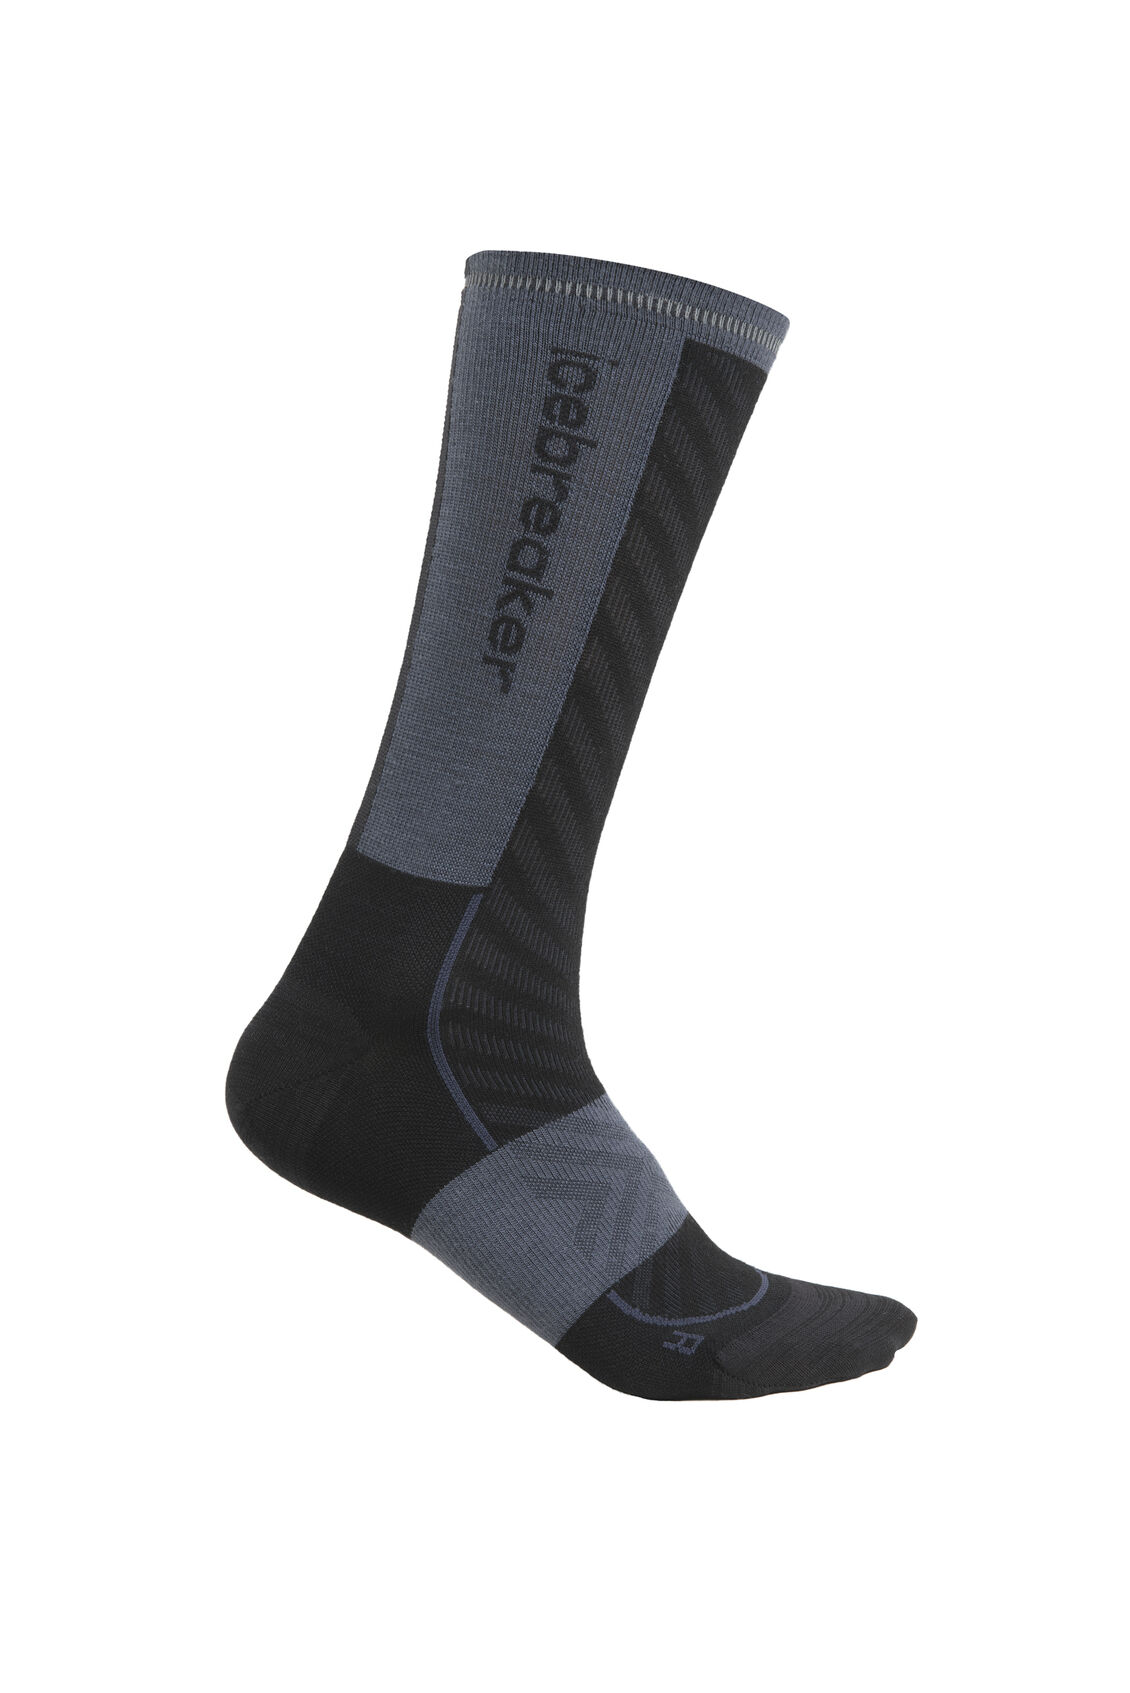 Icebreaker Merino Blend Run+ Ultralight Crew Socks (Women's) - Black/Graphite - Find Your Feet Australia Hobart Launceston Tasmania 